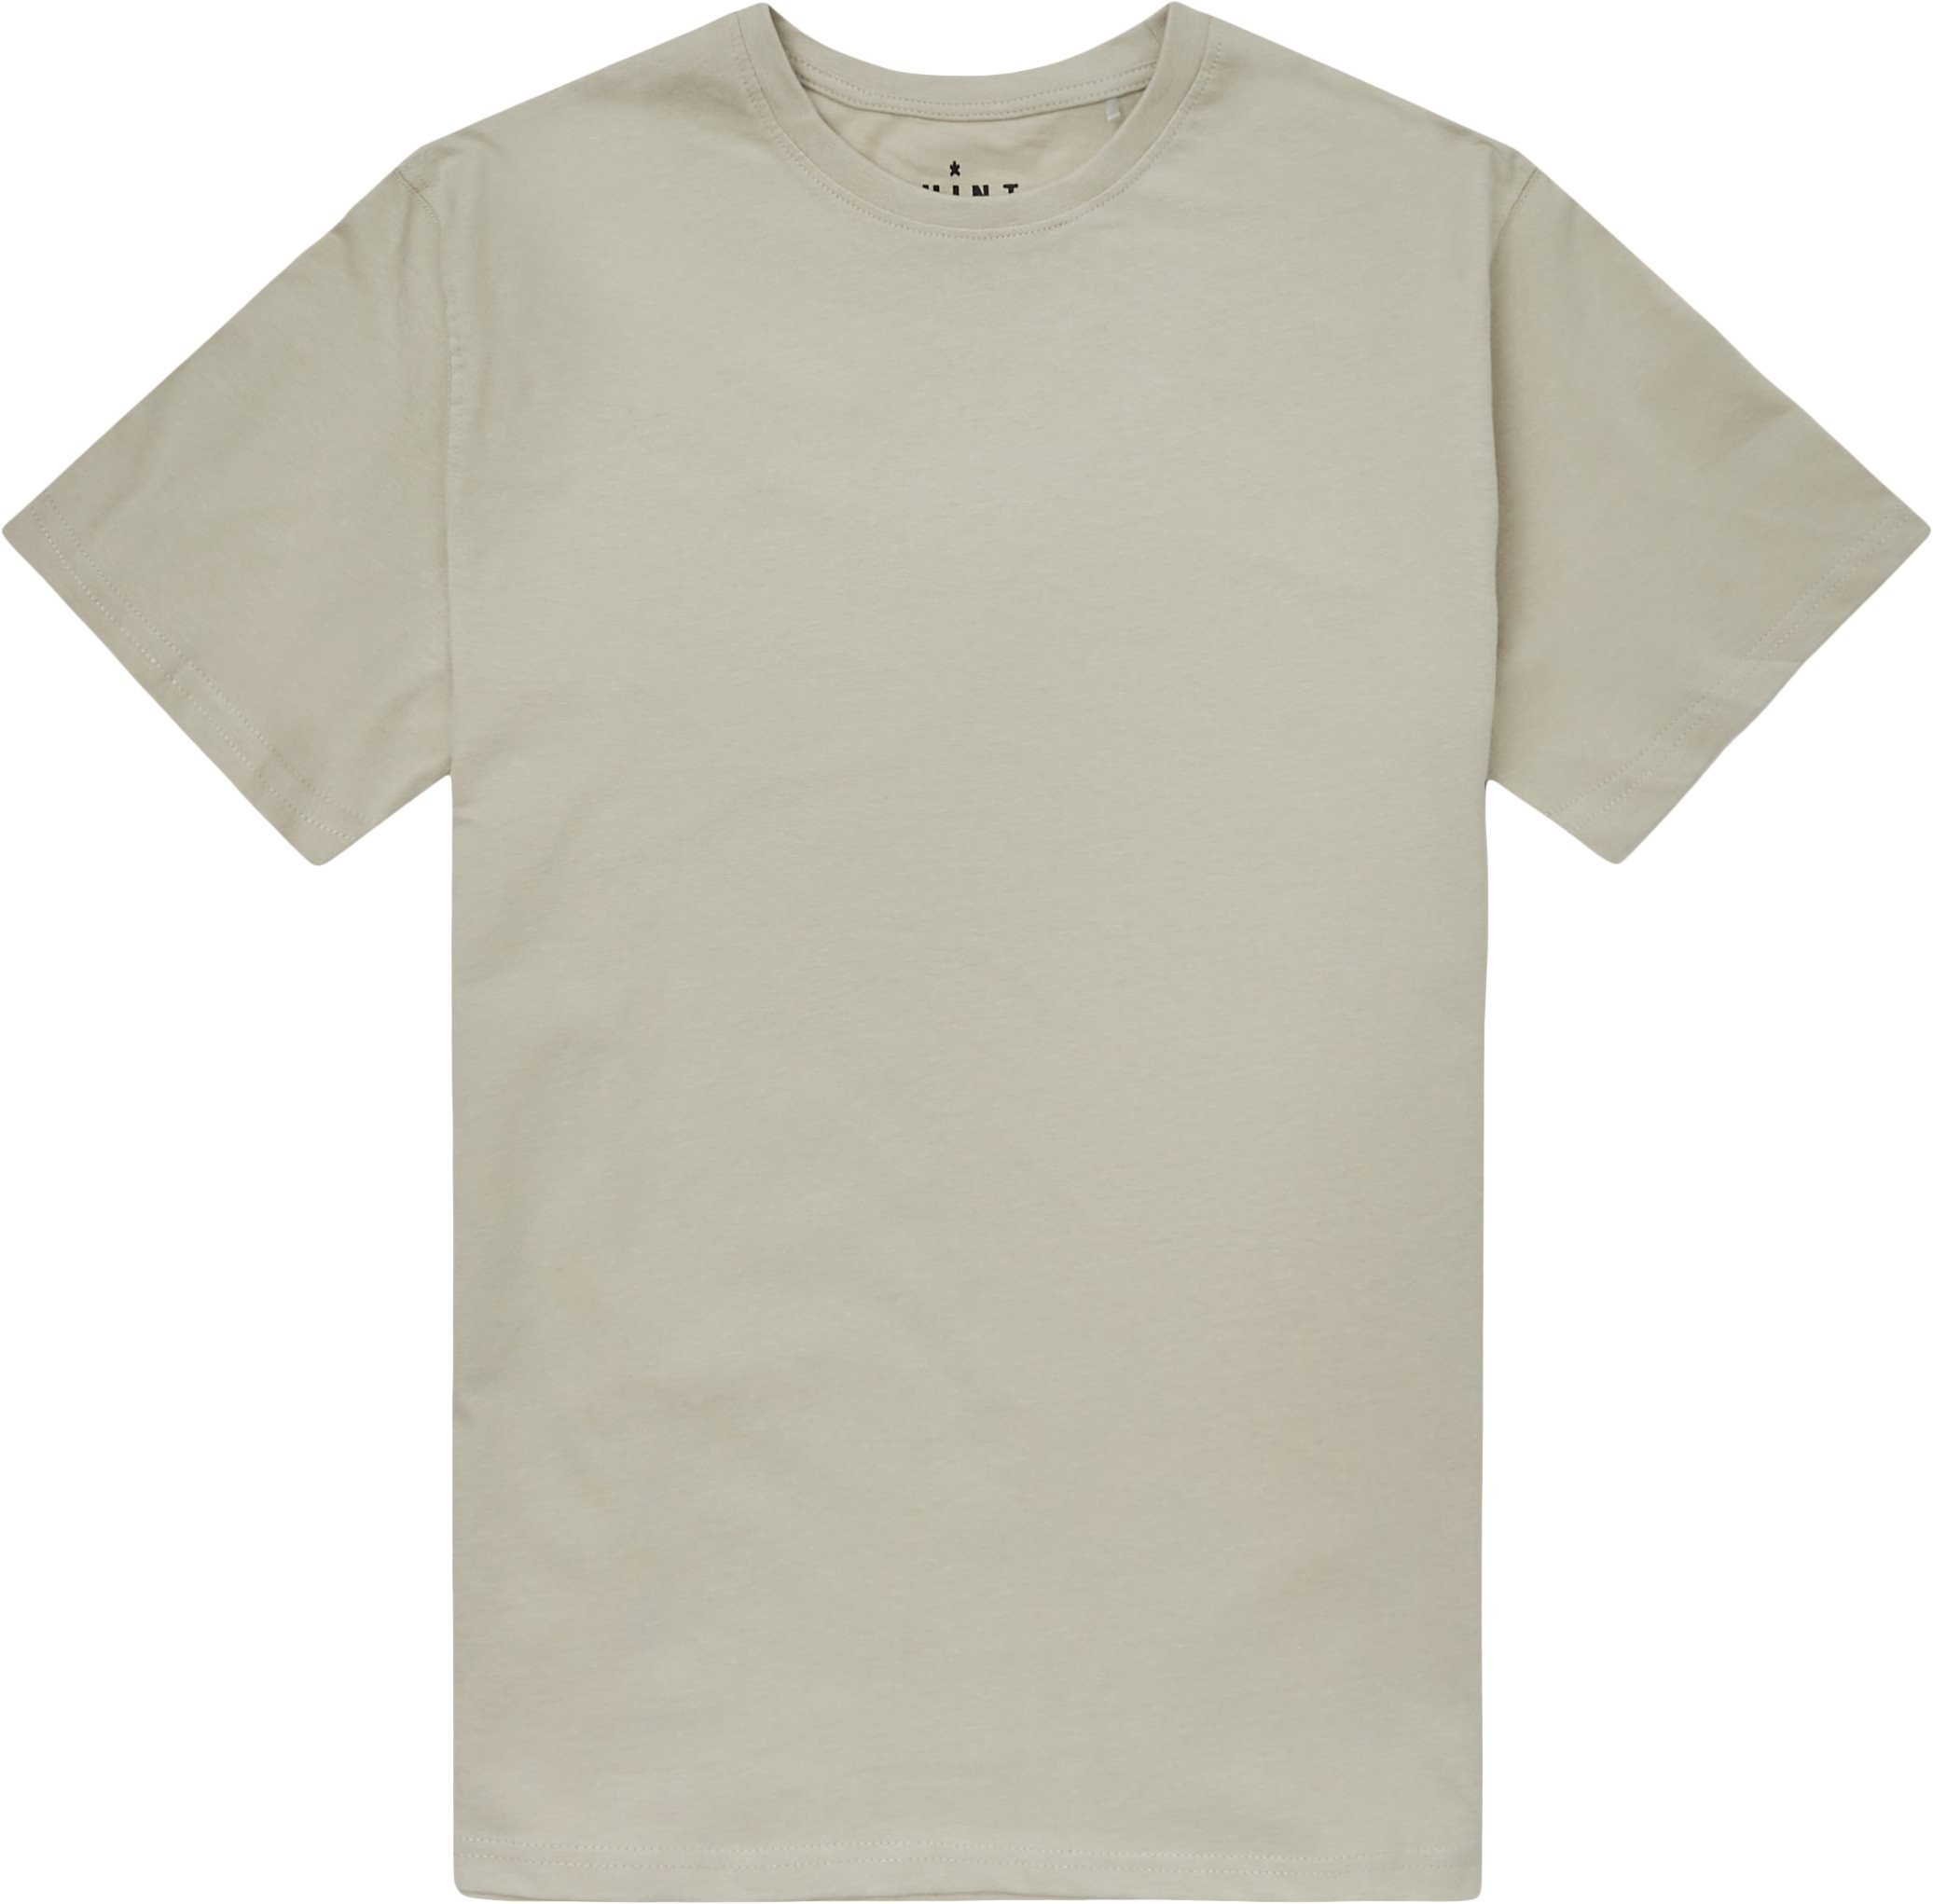 Brandon Crew Neck Tee - T-shirts - Regular fit - Sand